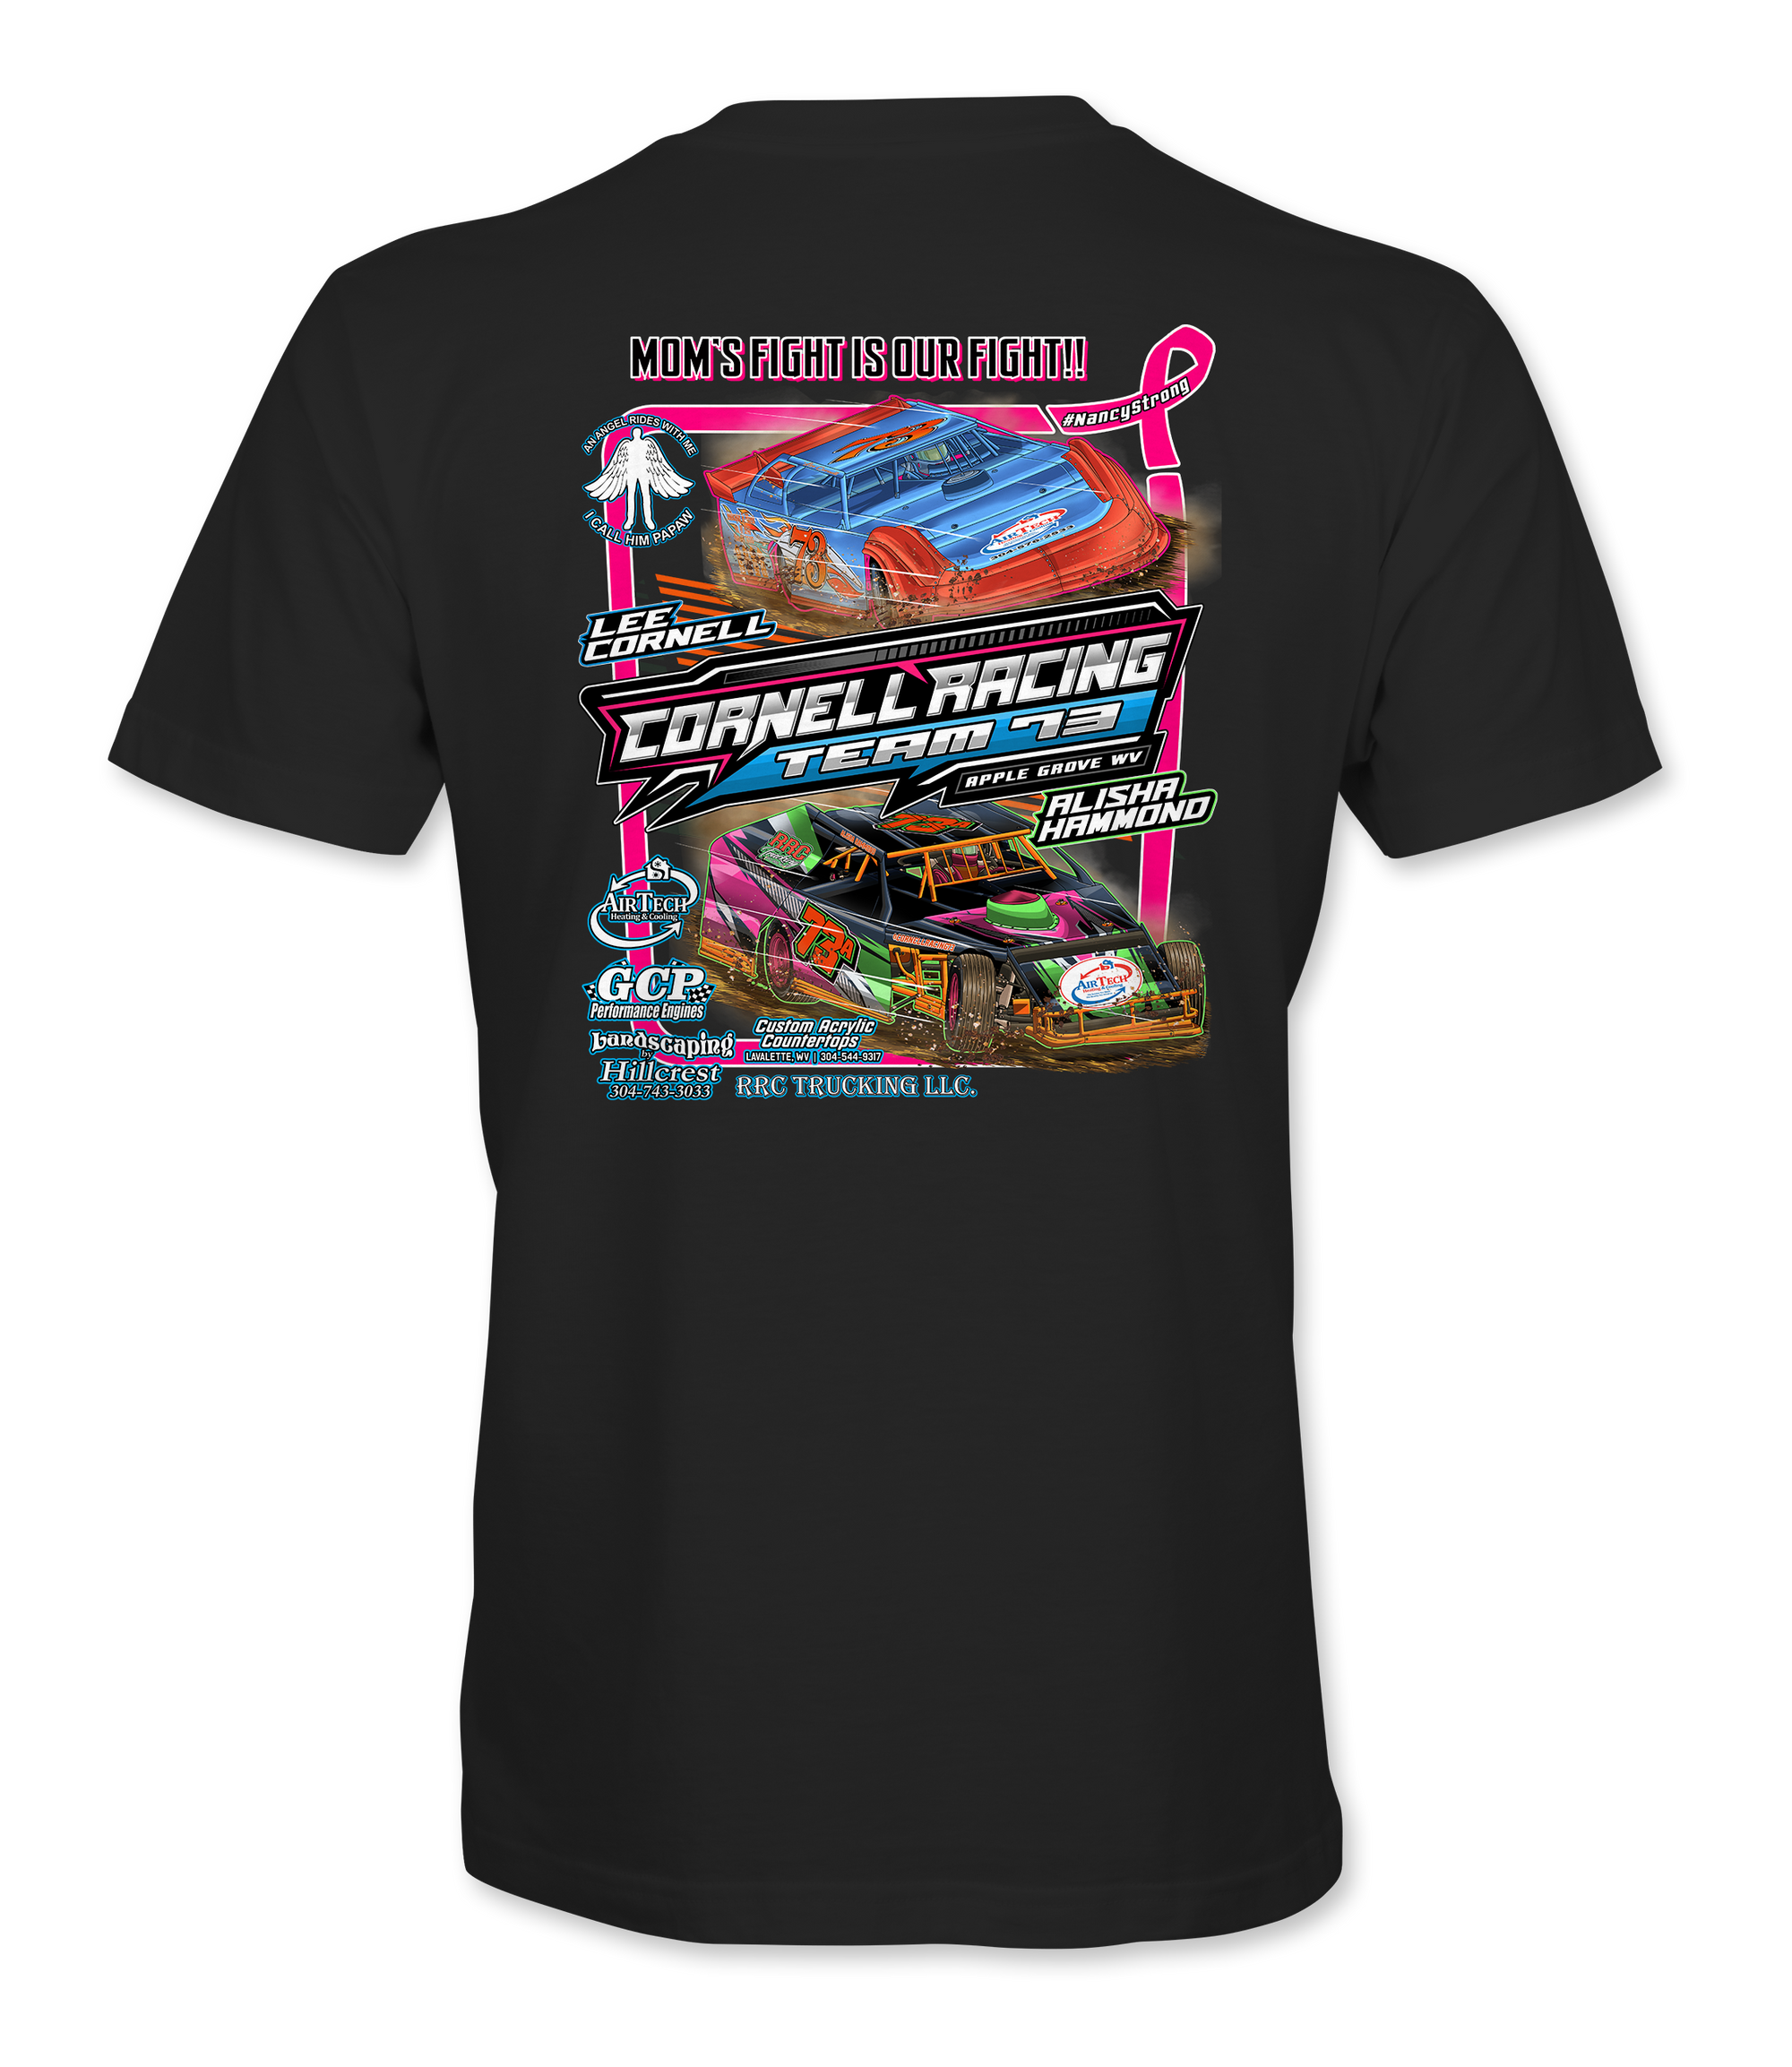 Cornell Racing T-Shirts